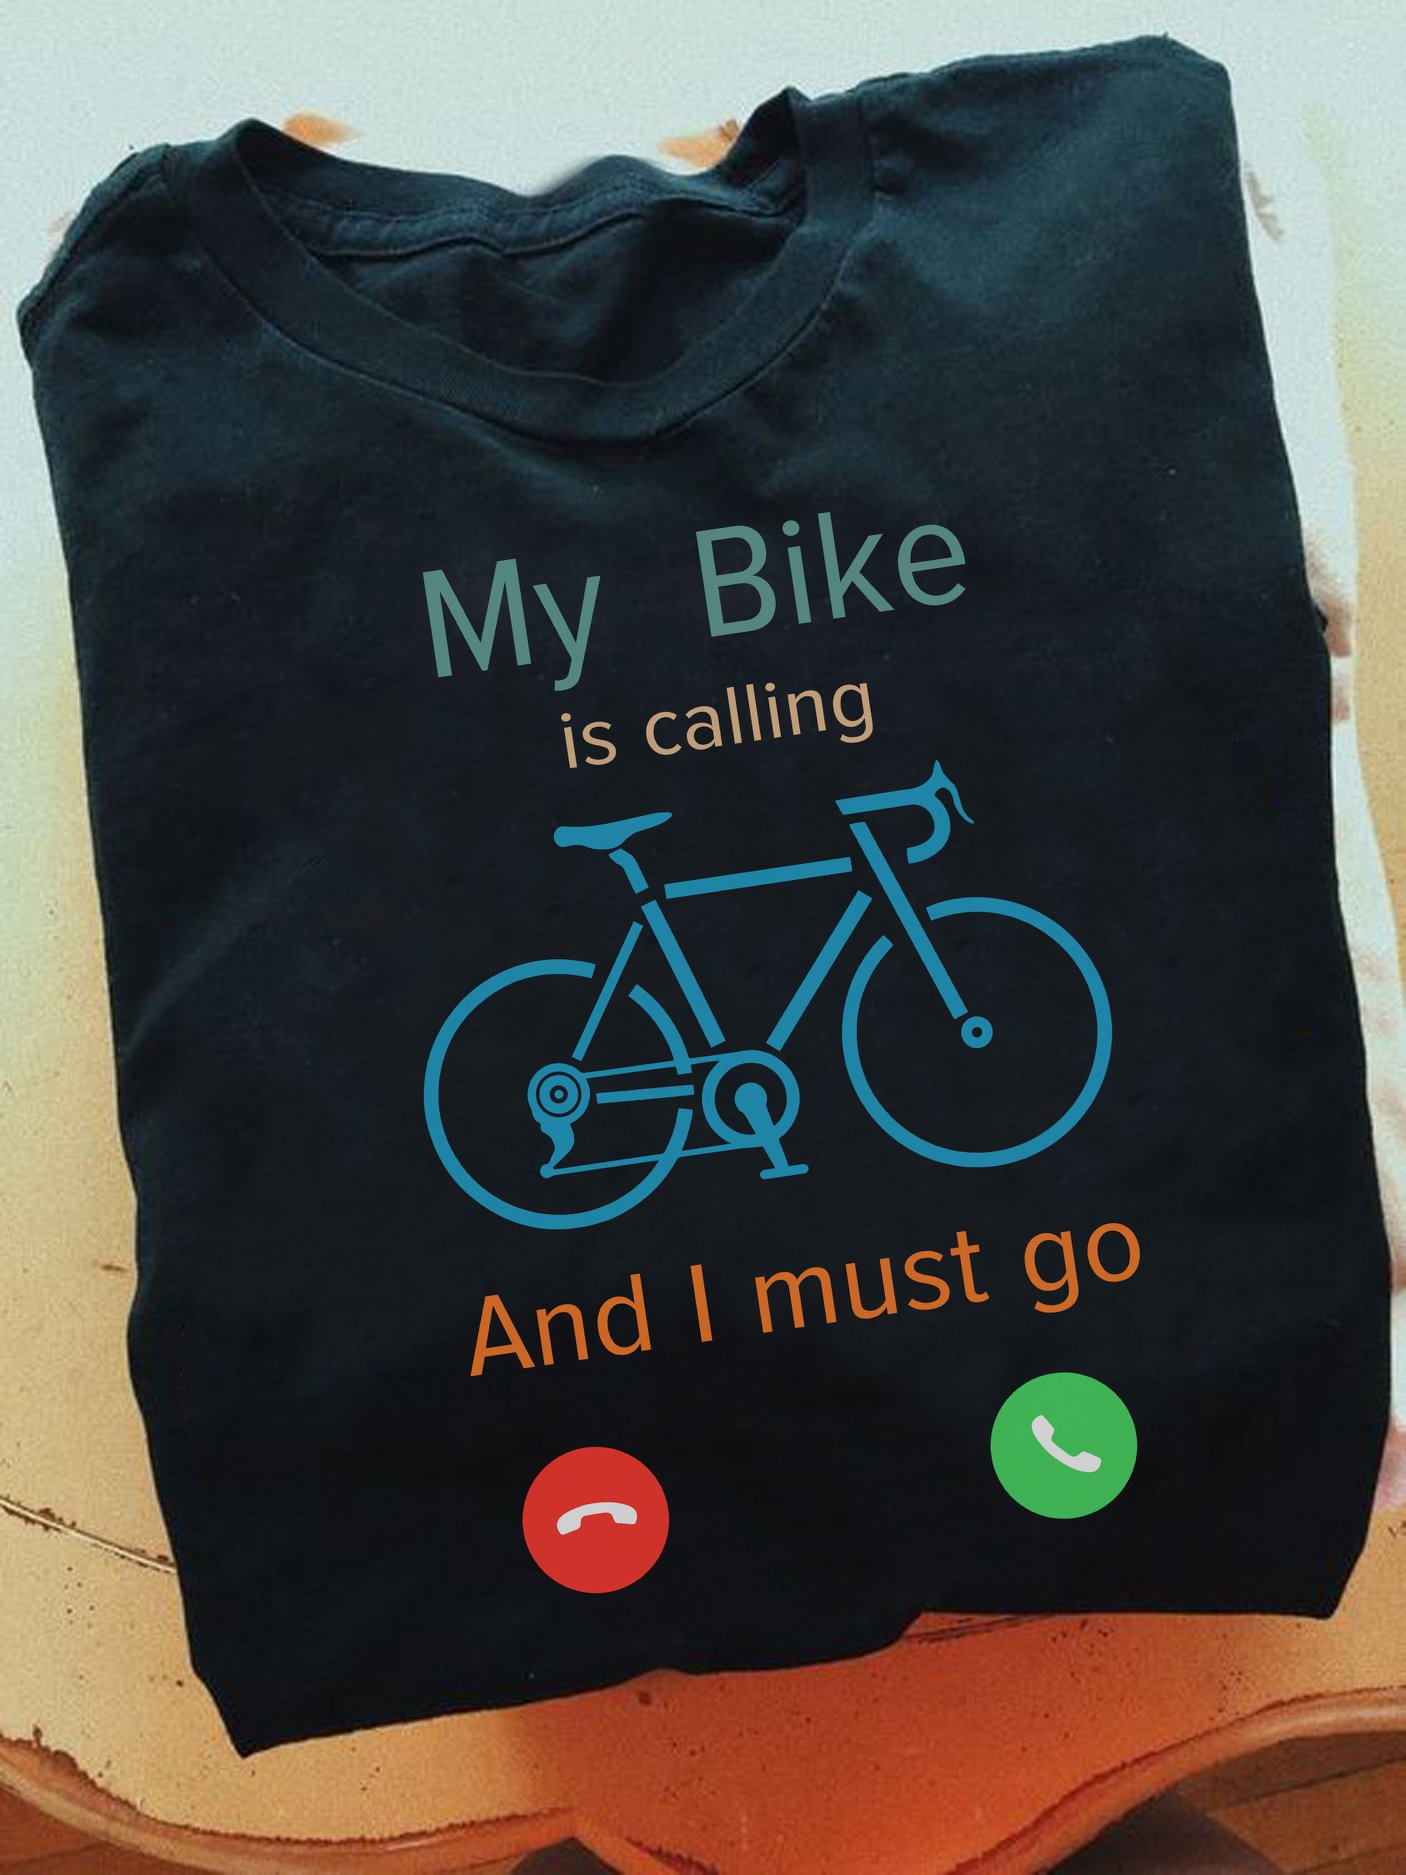 My bike is calling and I must go - Love riding bike